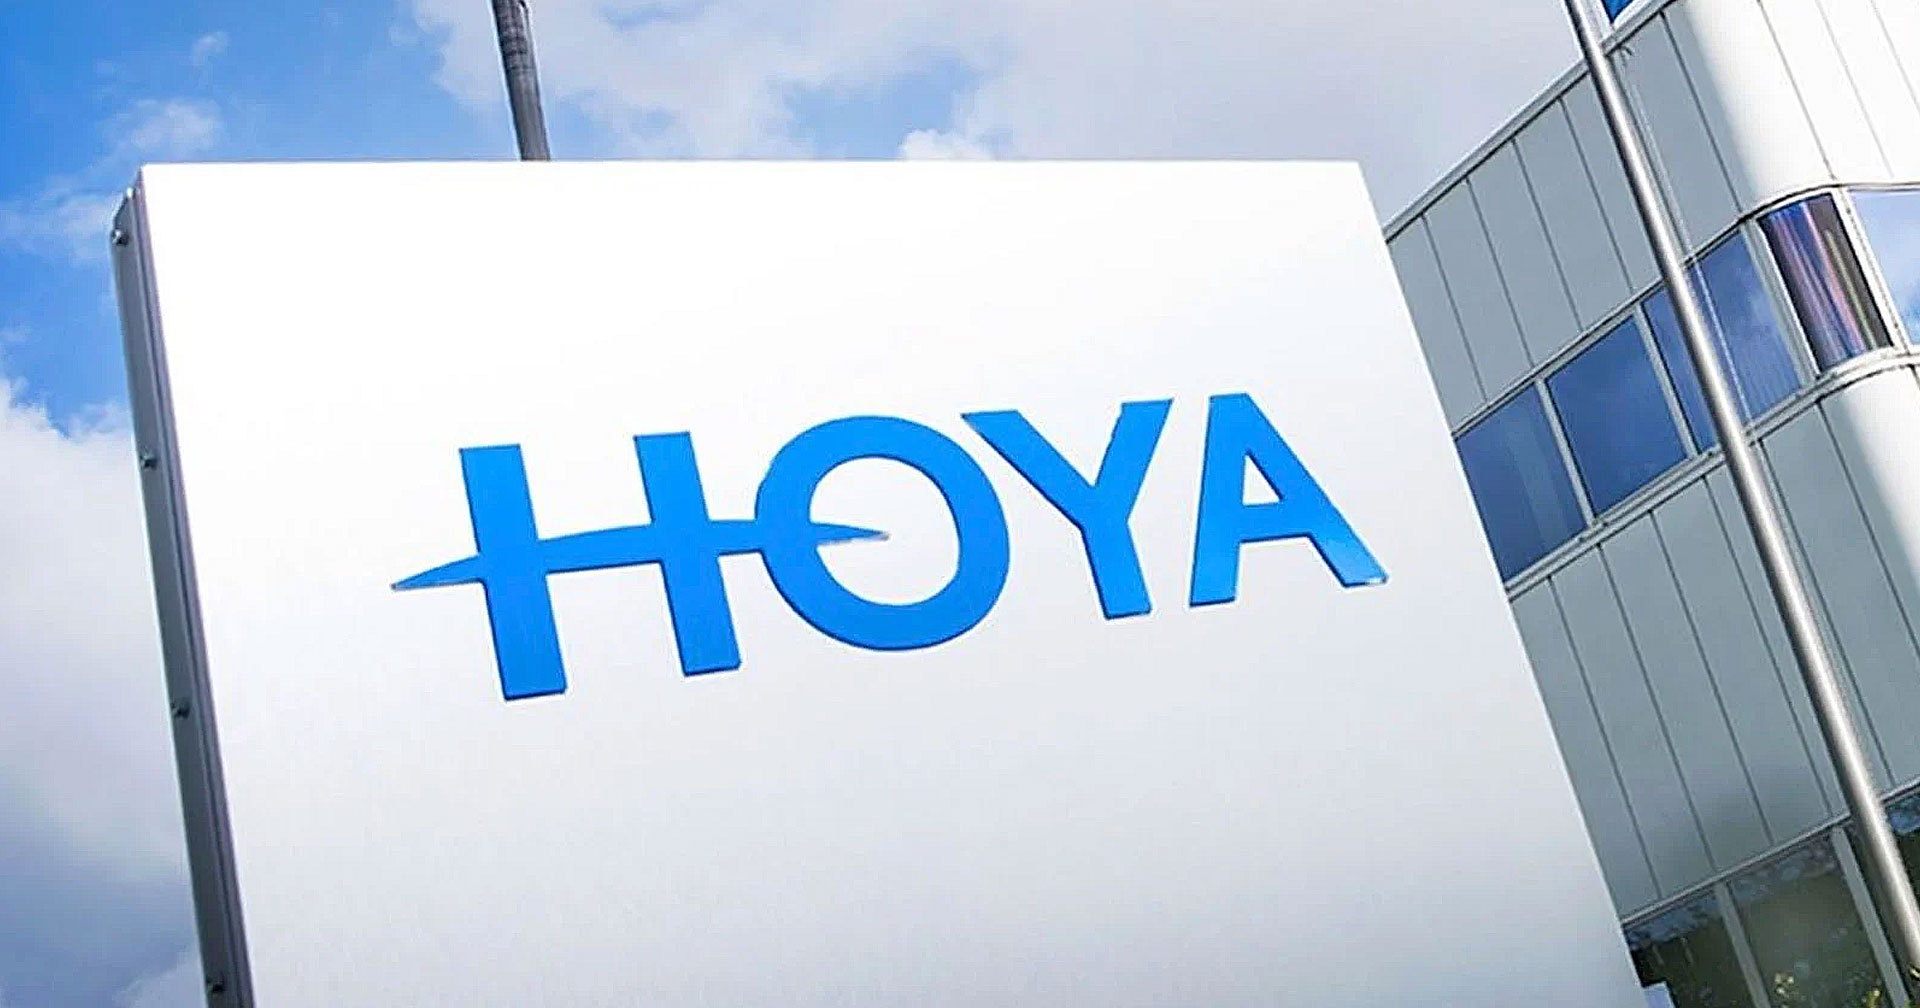 Hoya บริษัท Optic สัญชาติญี่ปุ่น ถูกโจมตีทางไซเบอร์ กระทบการผลิต